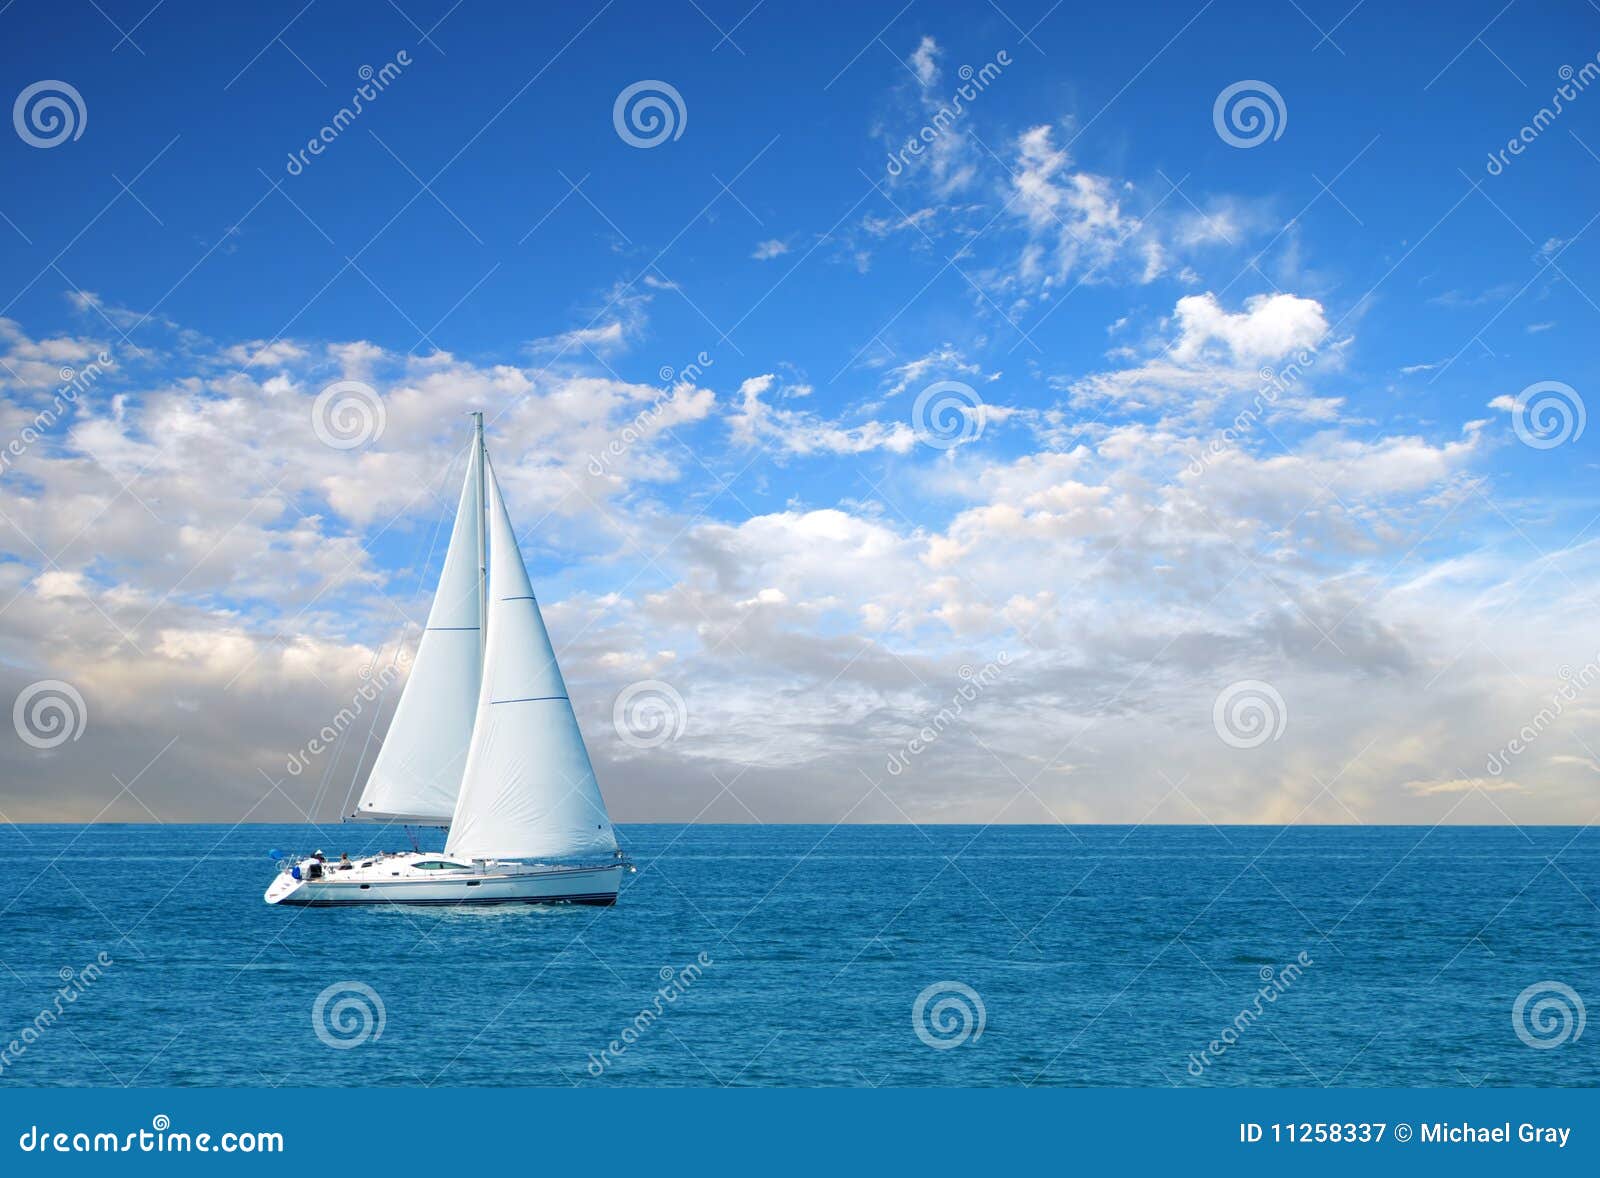 modern sail boat